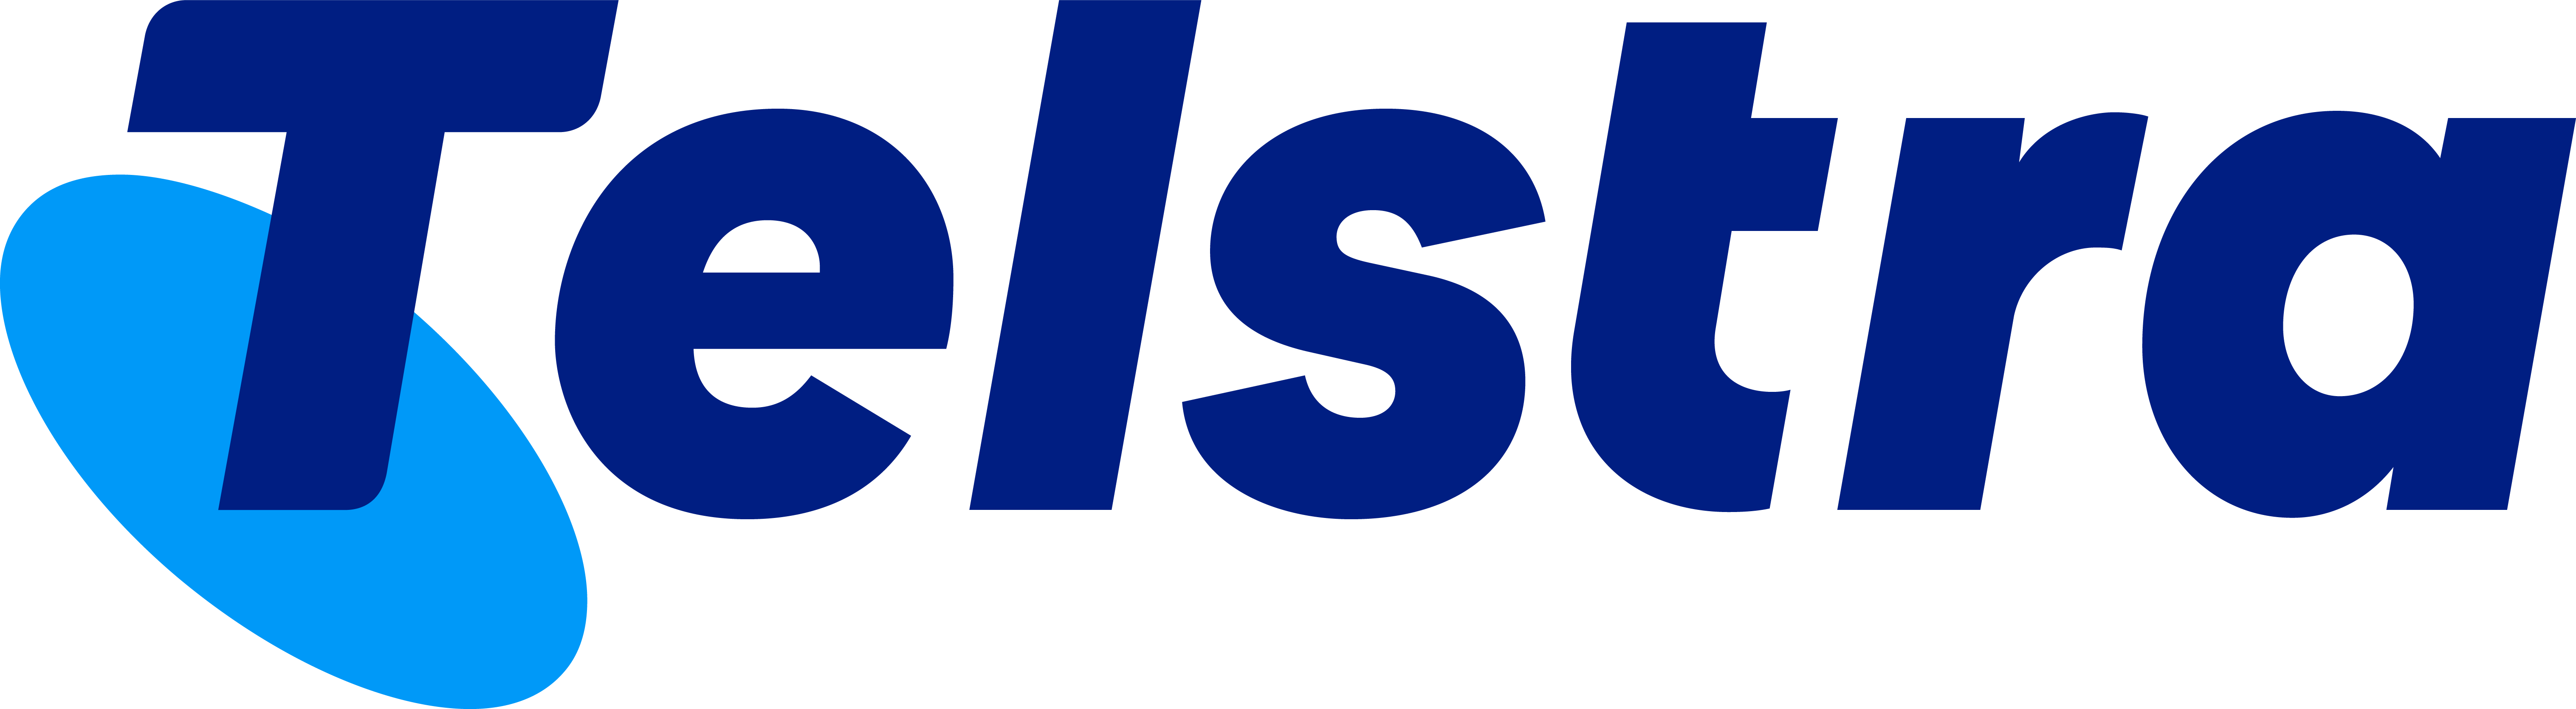 Telstra_logo_(horizontal_variant)